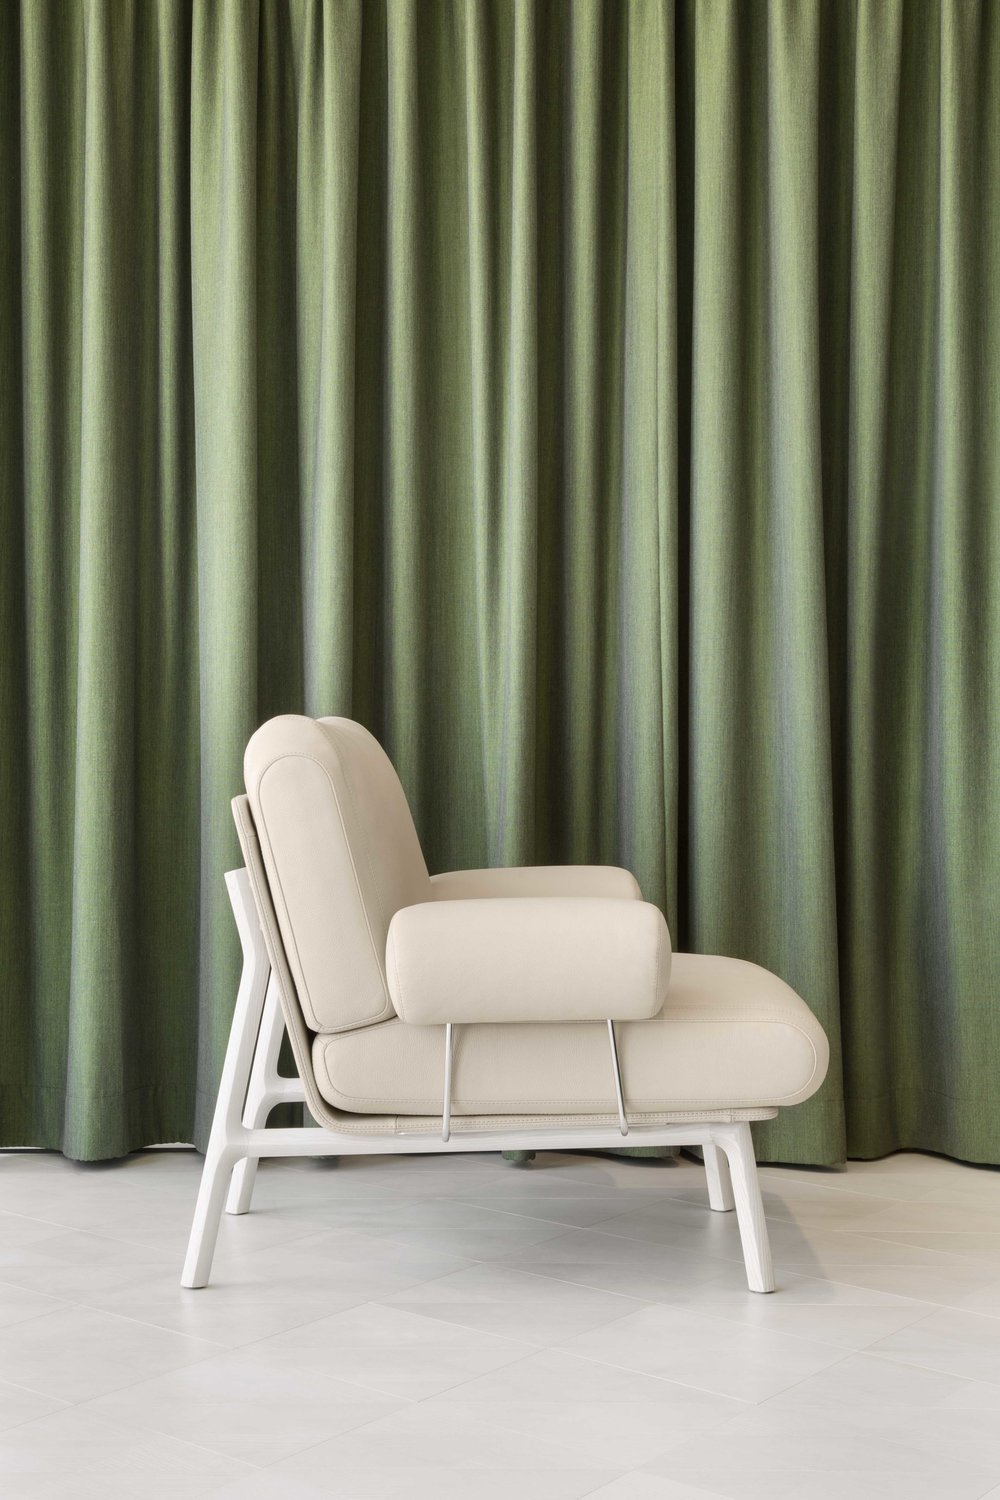 medeo-armchair_furniture-design_coordination-berlin_03.jpg